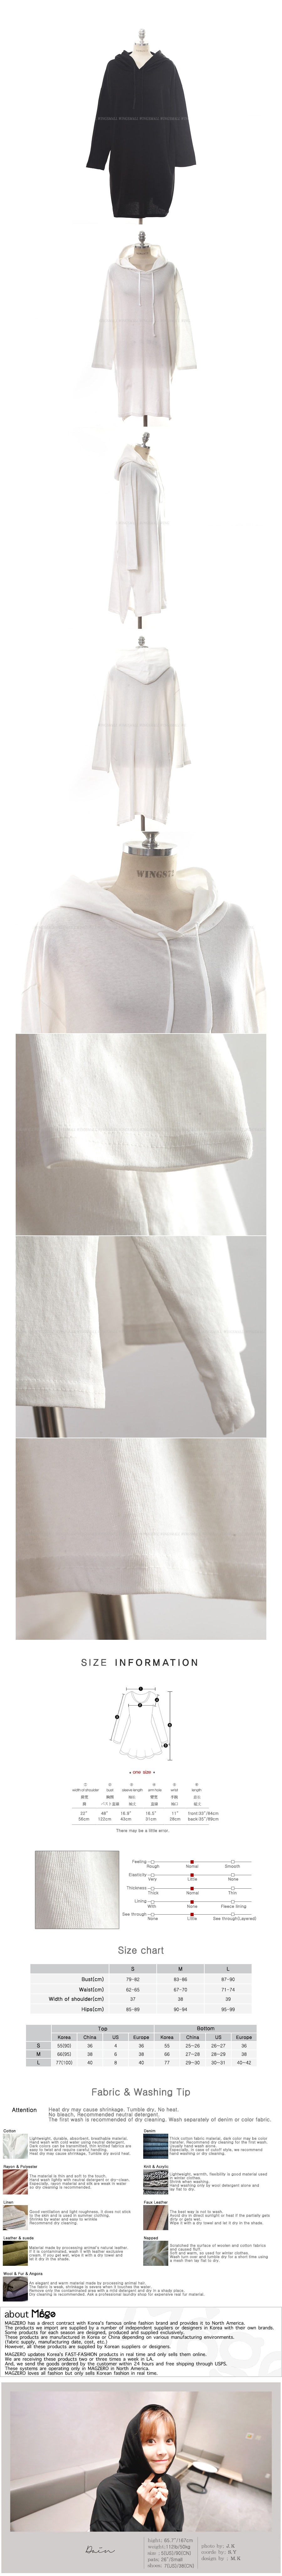 [Autumn New] Hooded Sweatshirt Dress #White One Size(S-M)